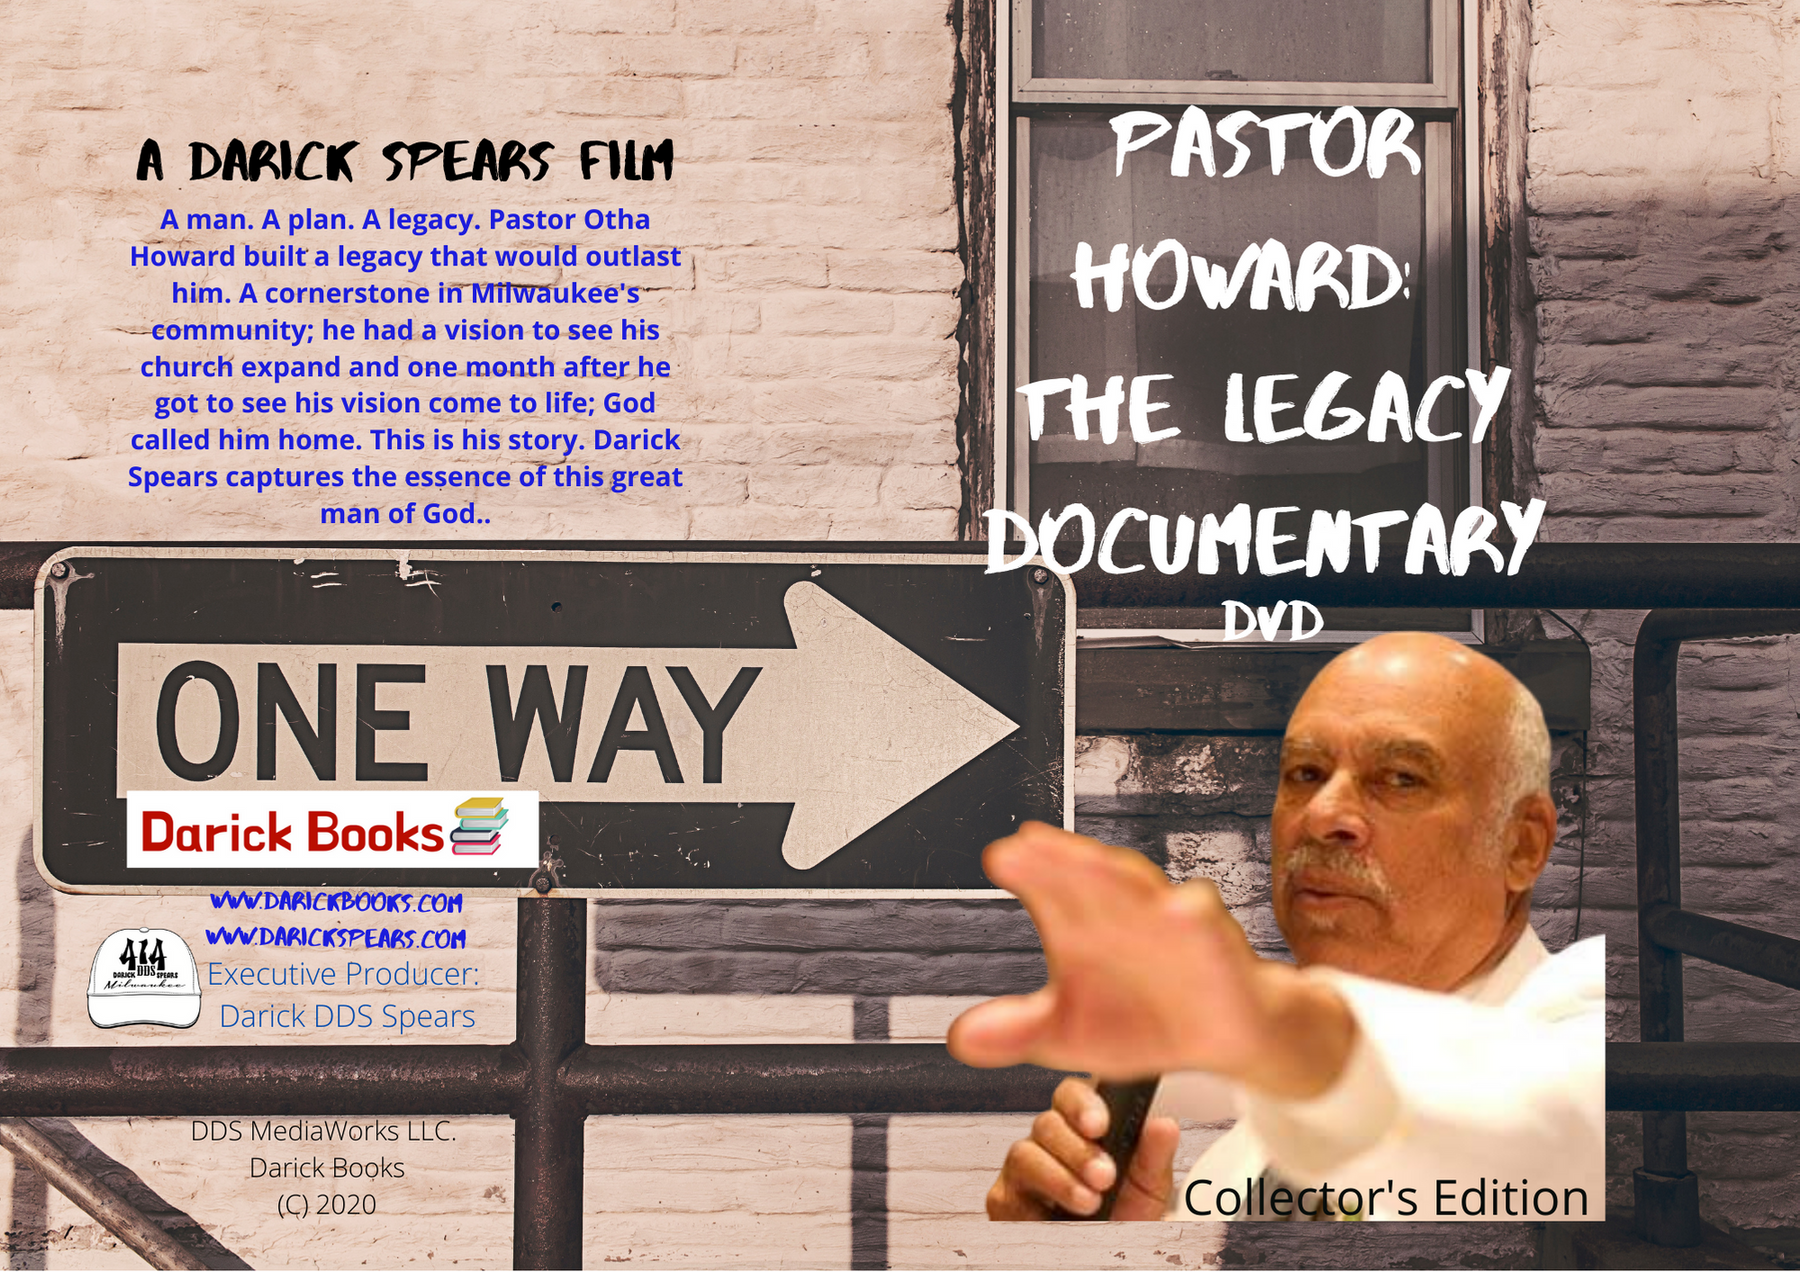 Pastor Howard: The Legacy